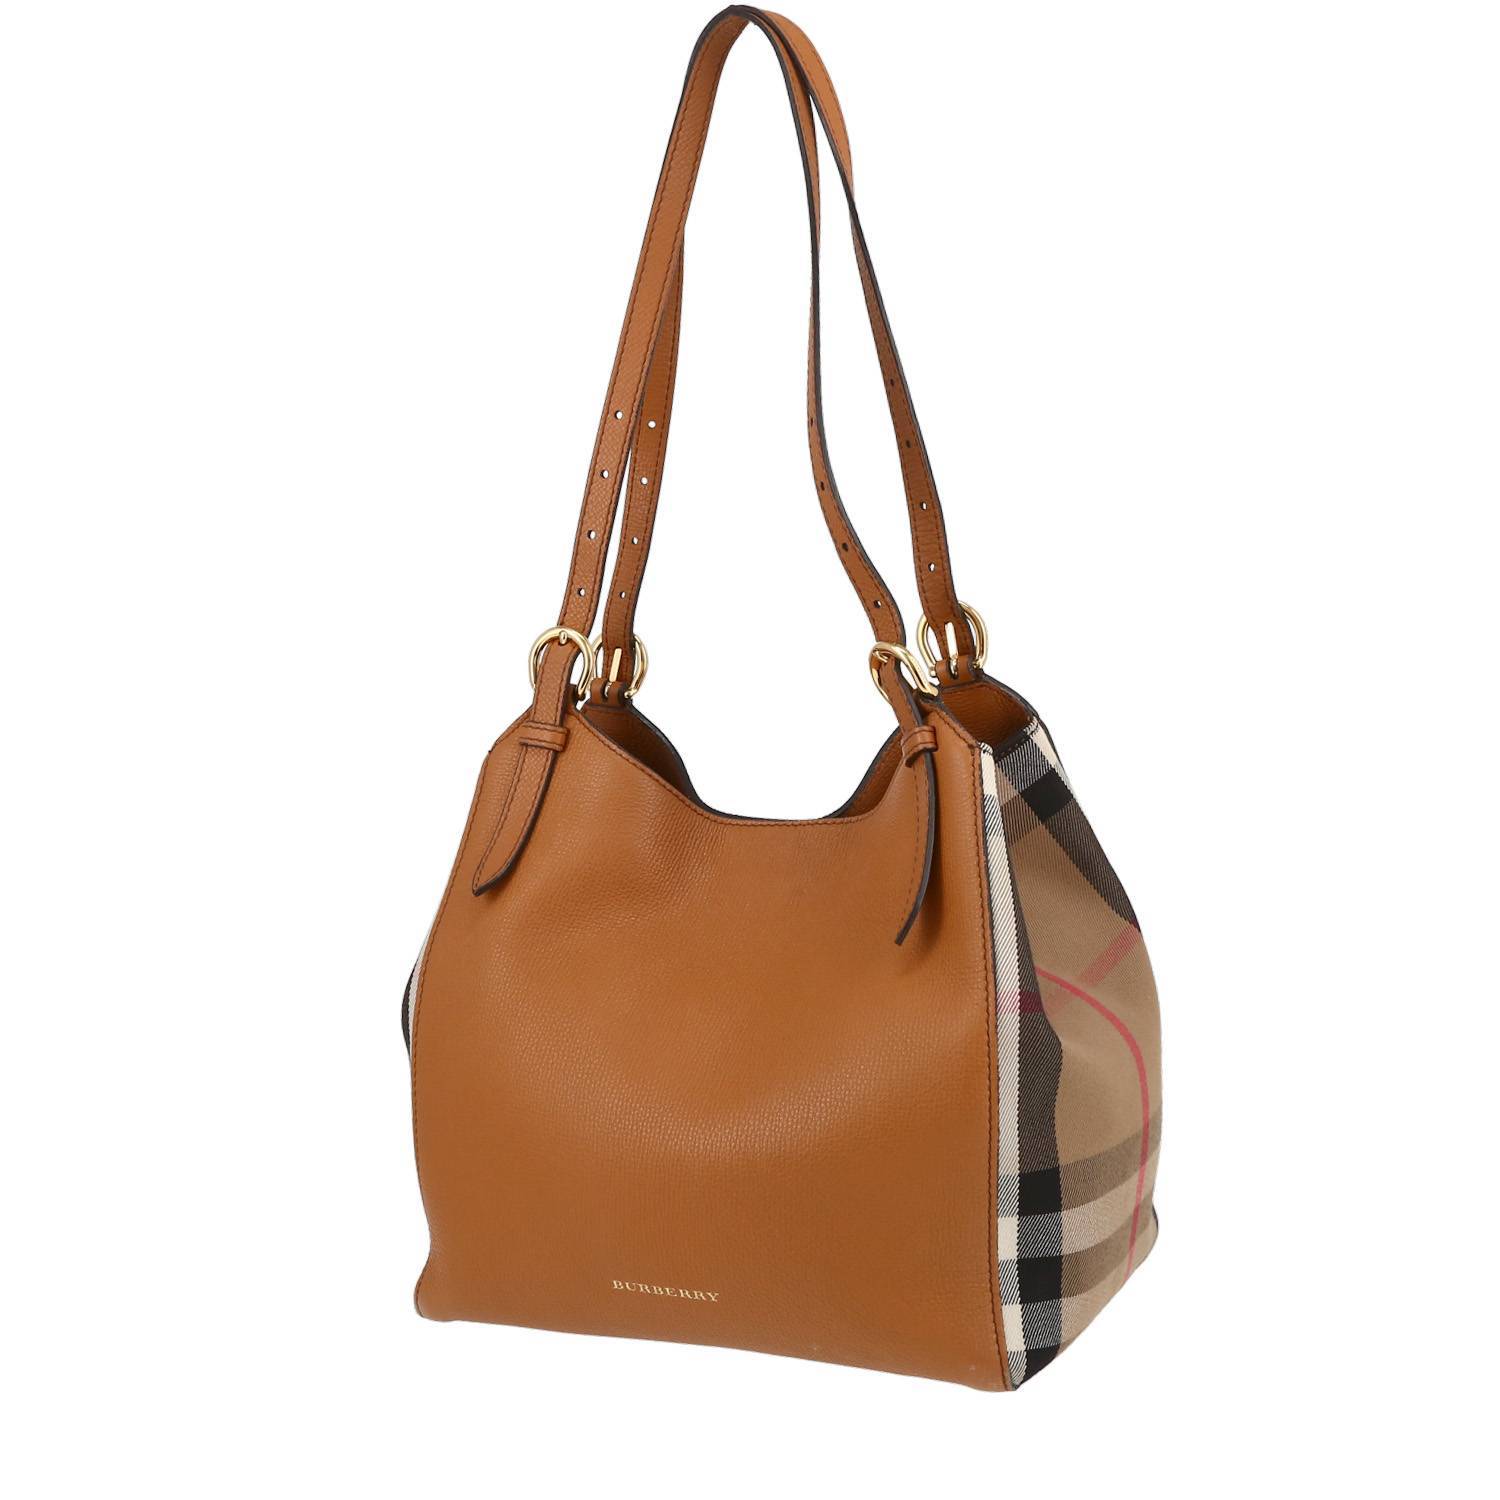 Are Burberry Handbags expensive? - Quora